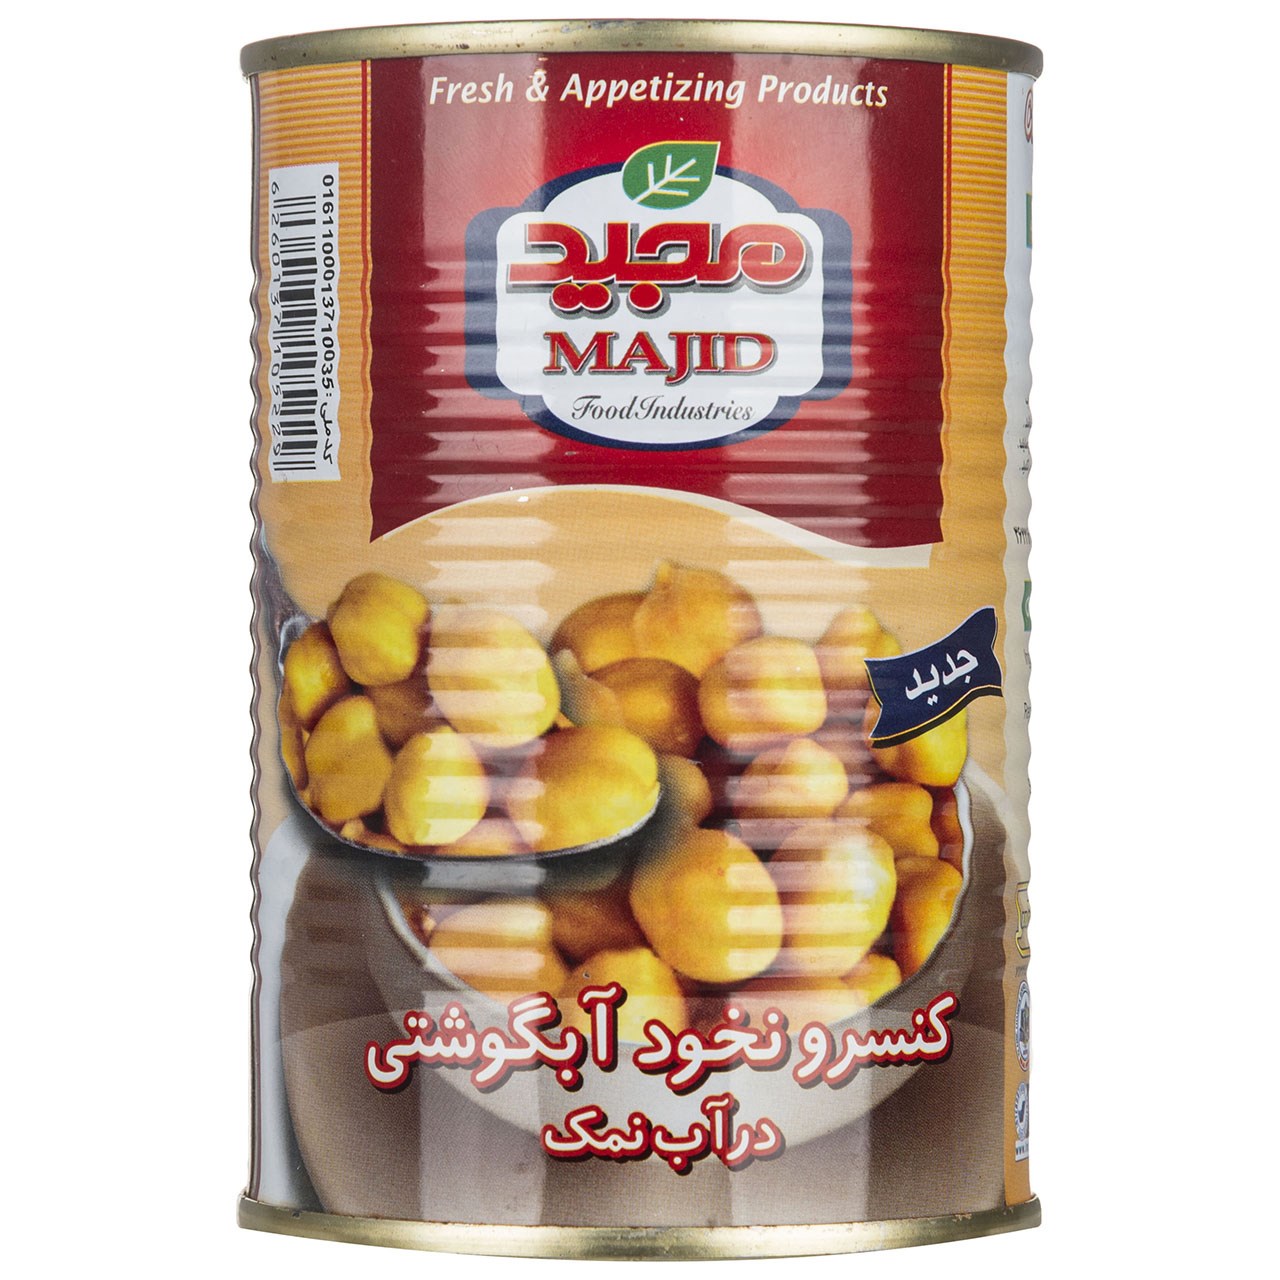 Canned Broth chickpeas in 400 g of brine Majid food industry